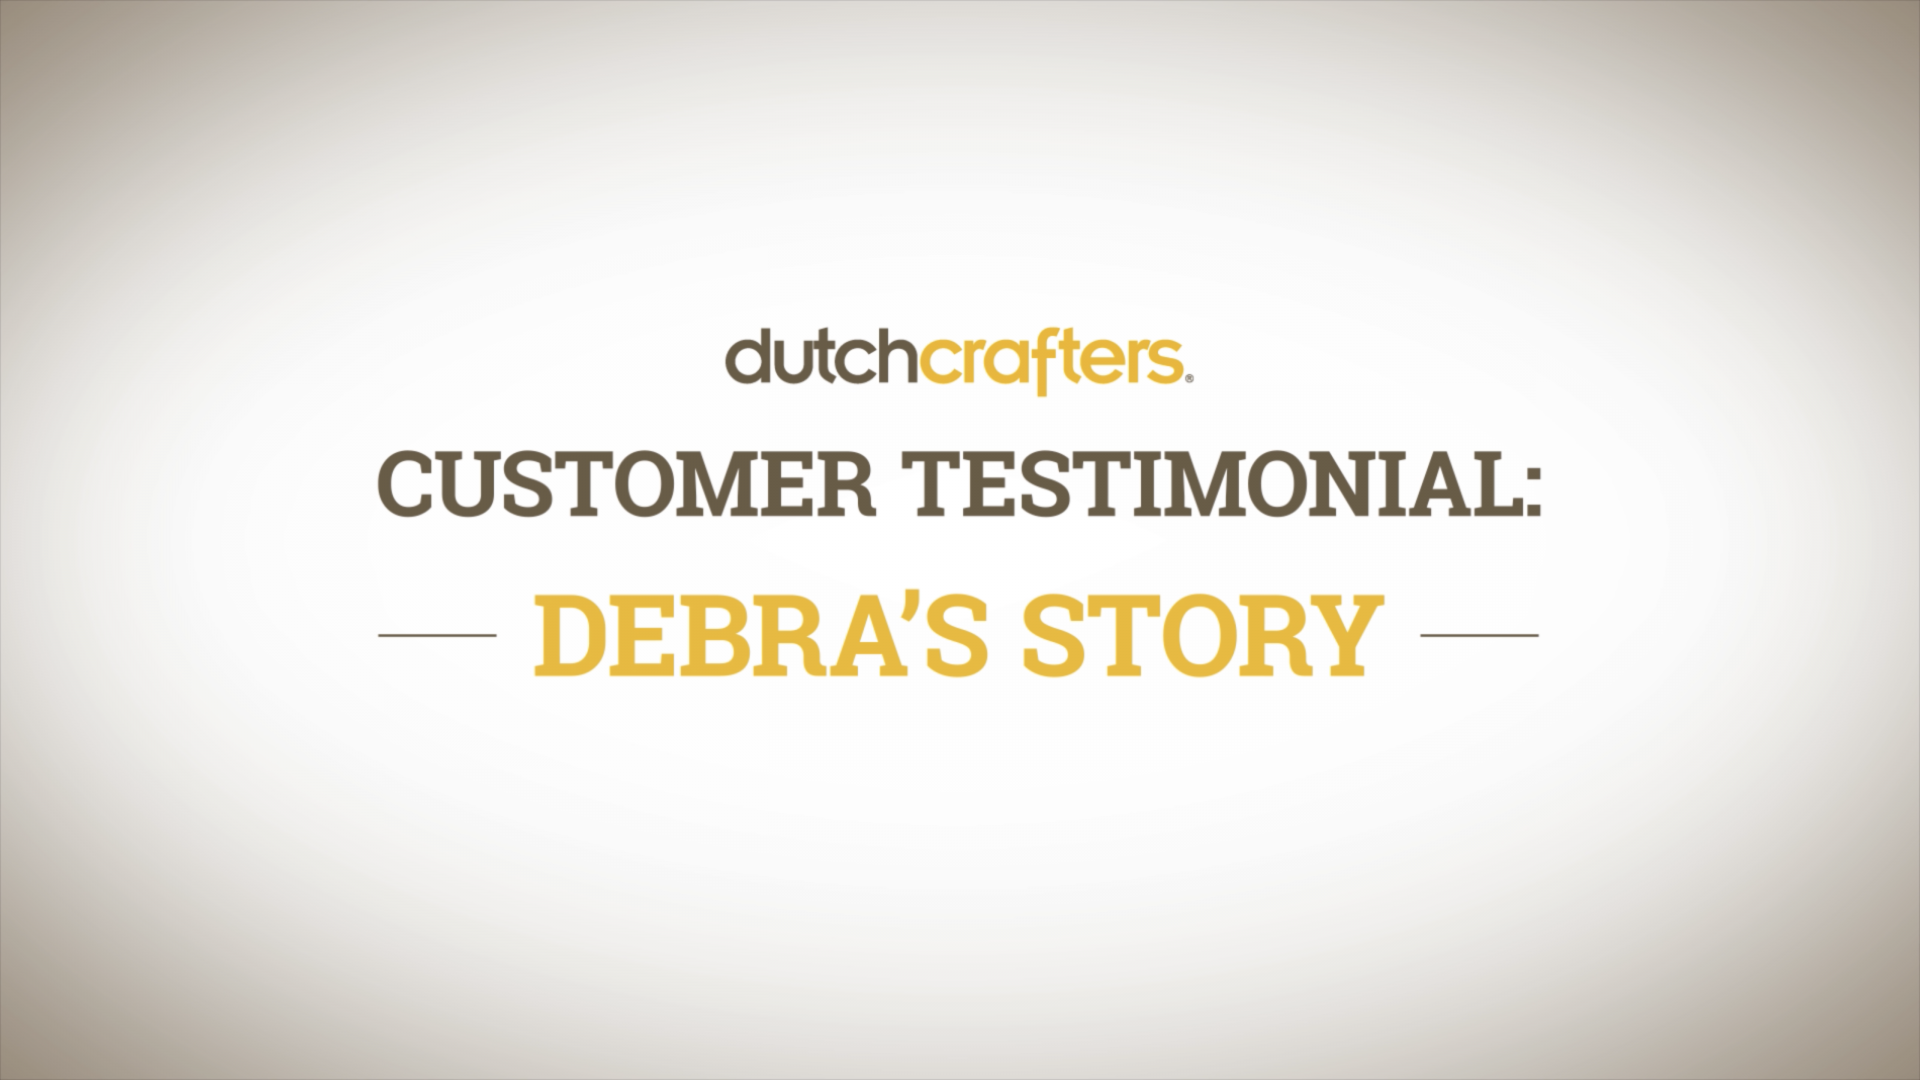 DutchCrafters Customer Testimonial: Debra's Story Video Title Screen